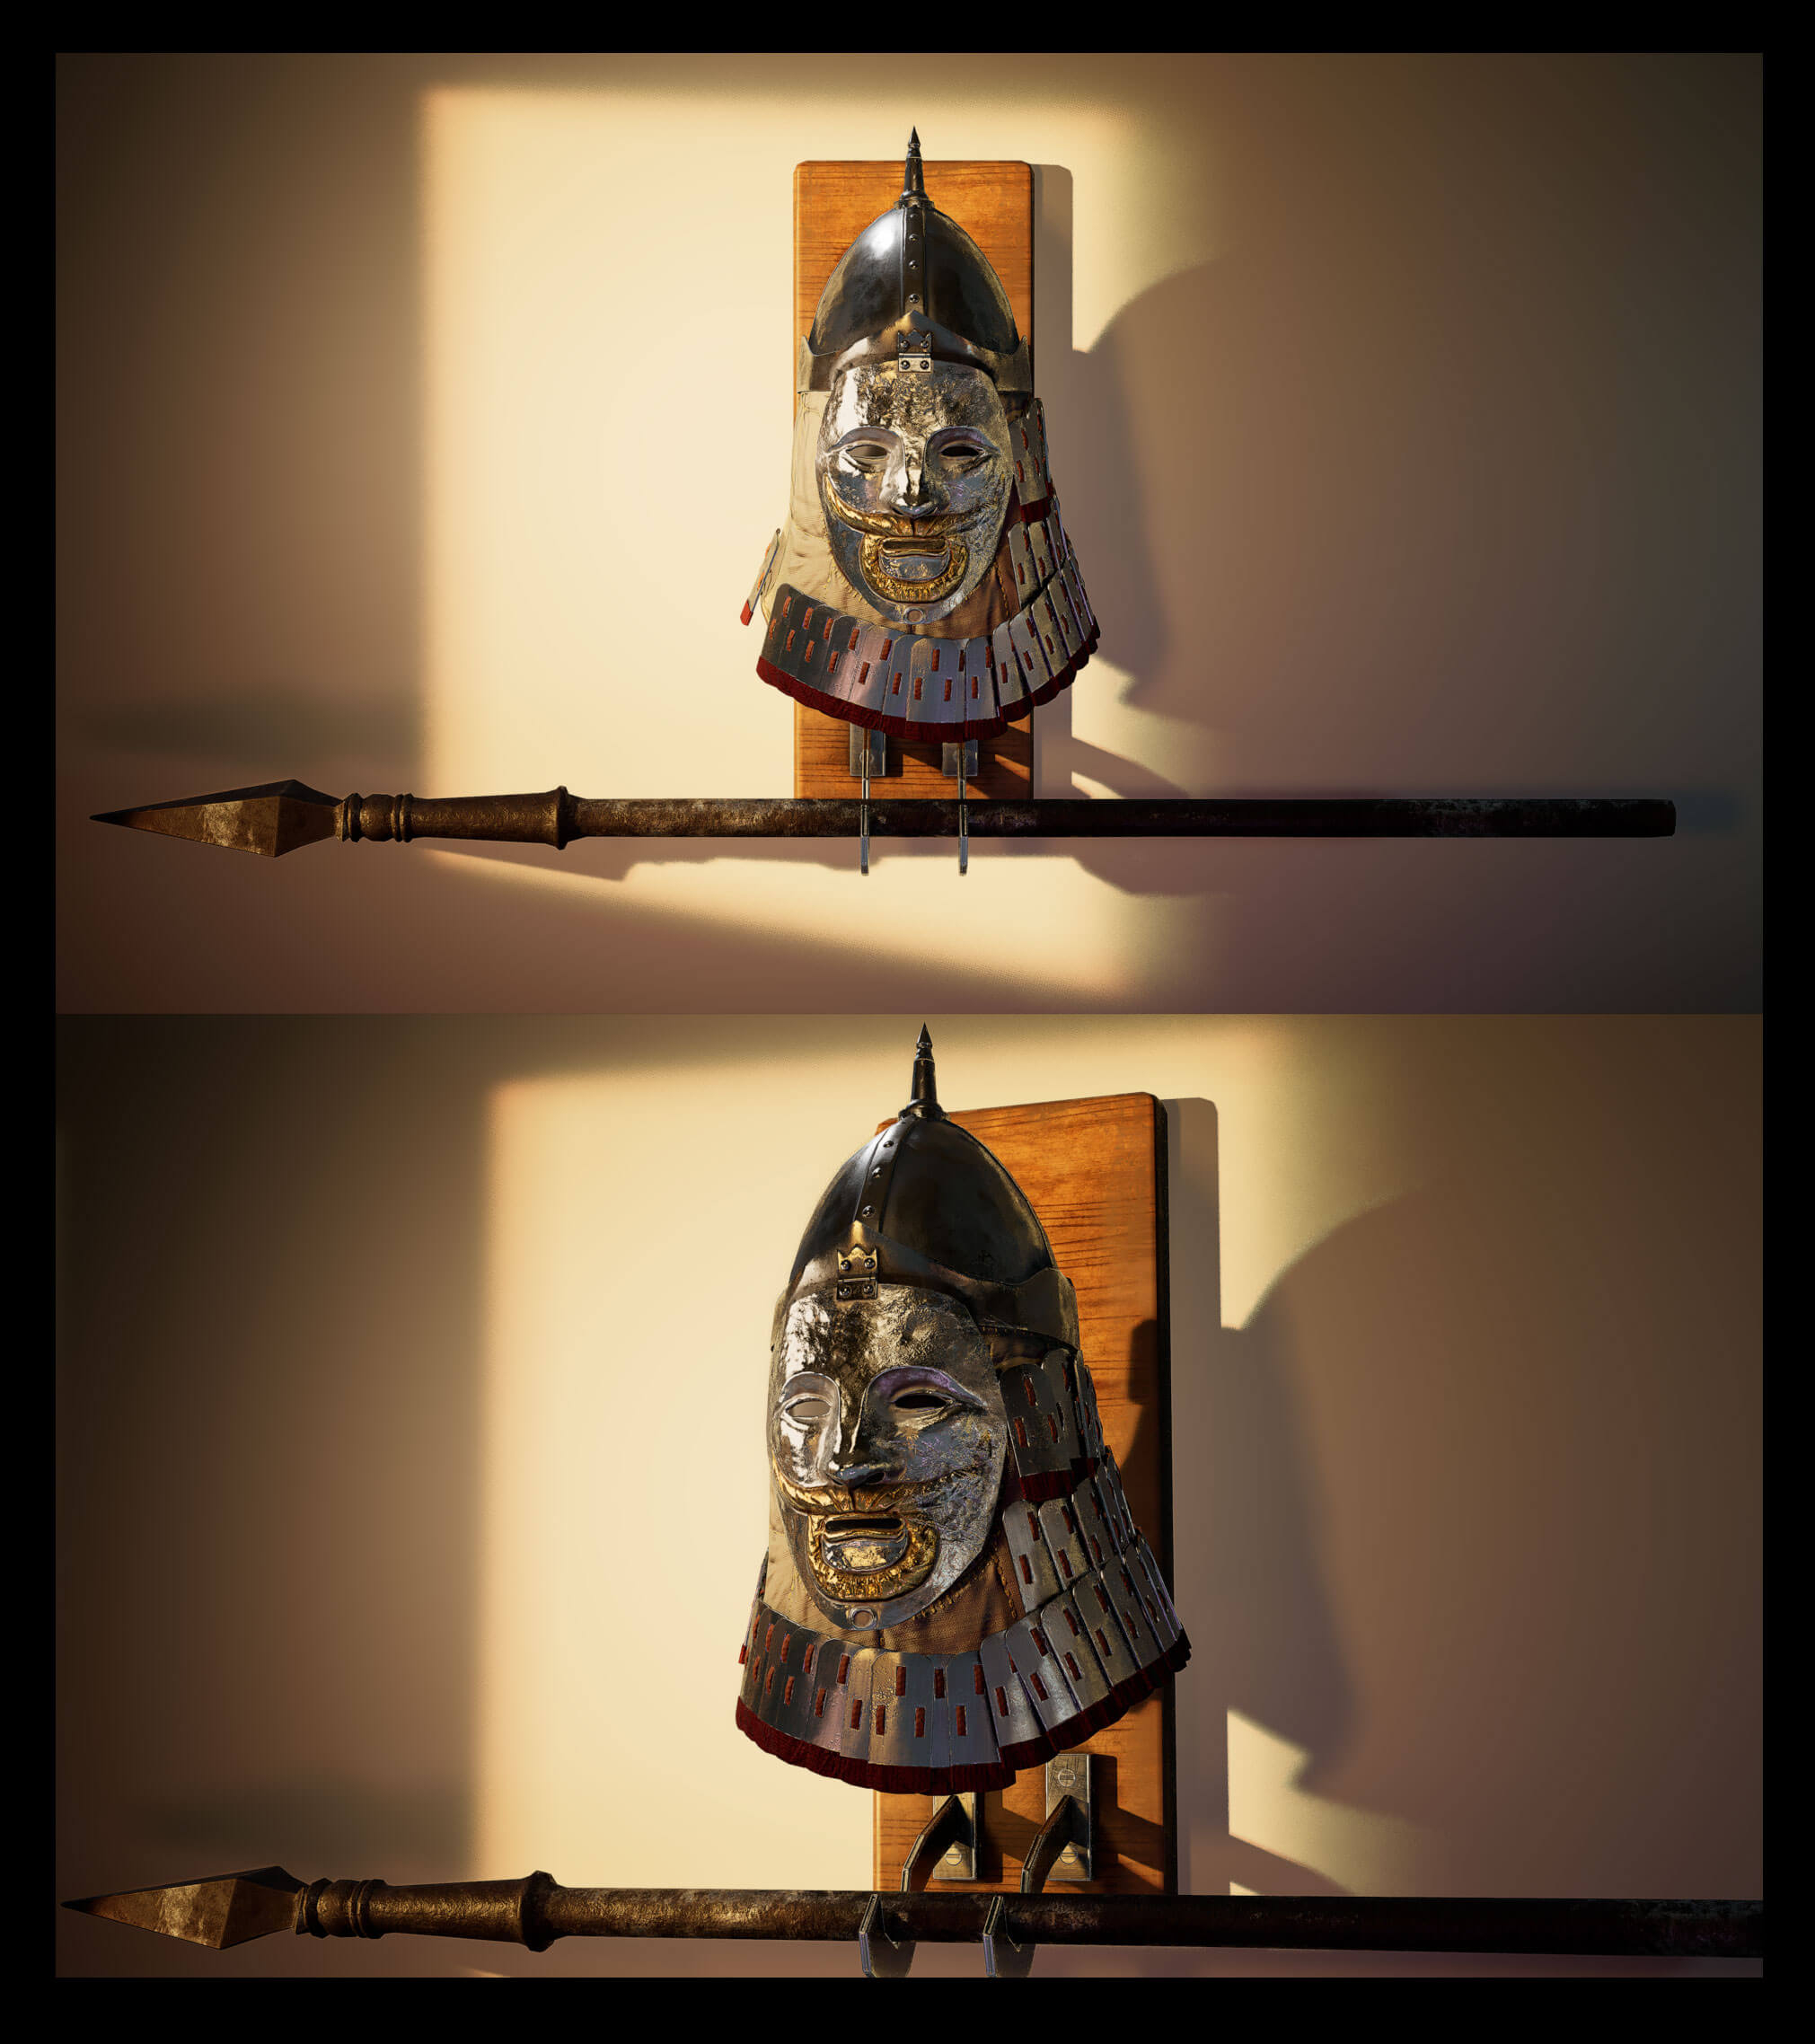 A realistic digital model of an ancient Asian armor headpiece.